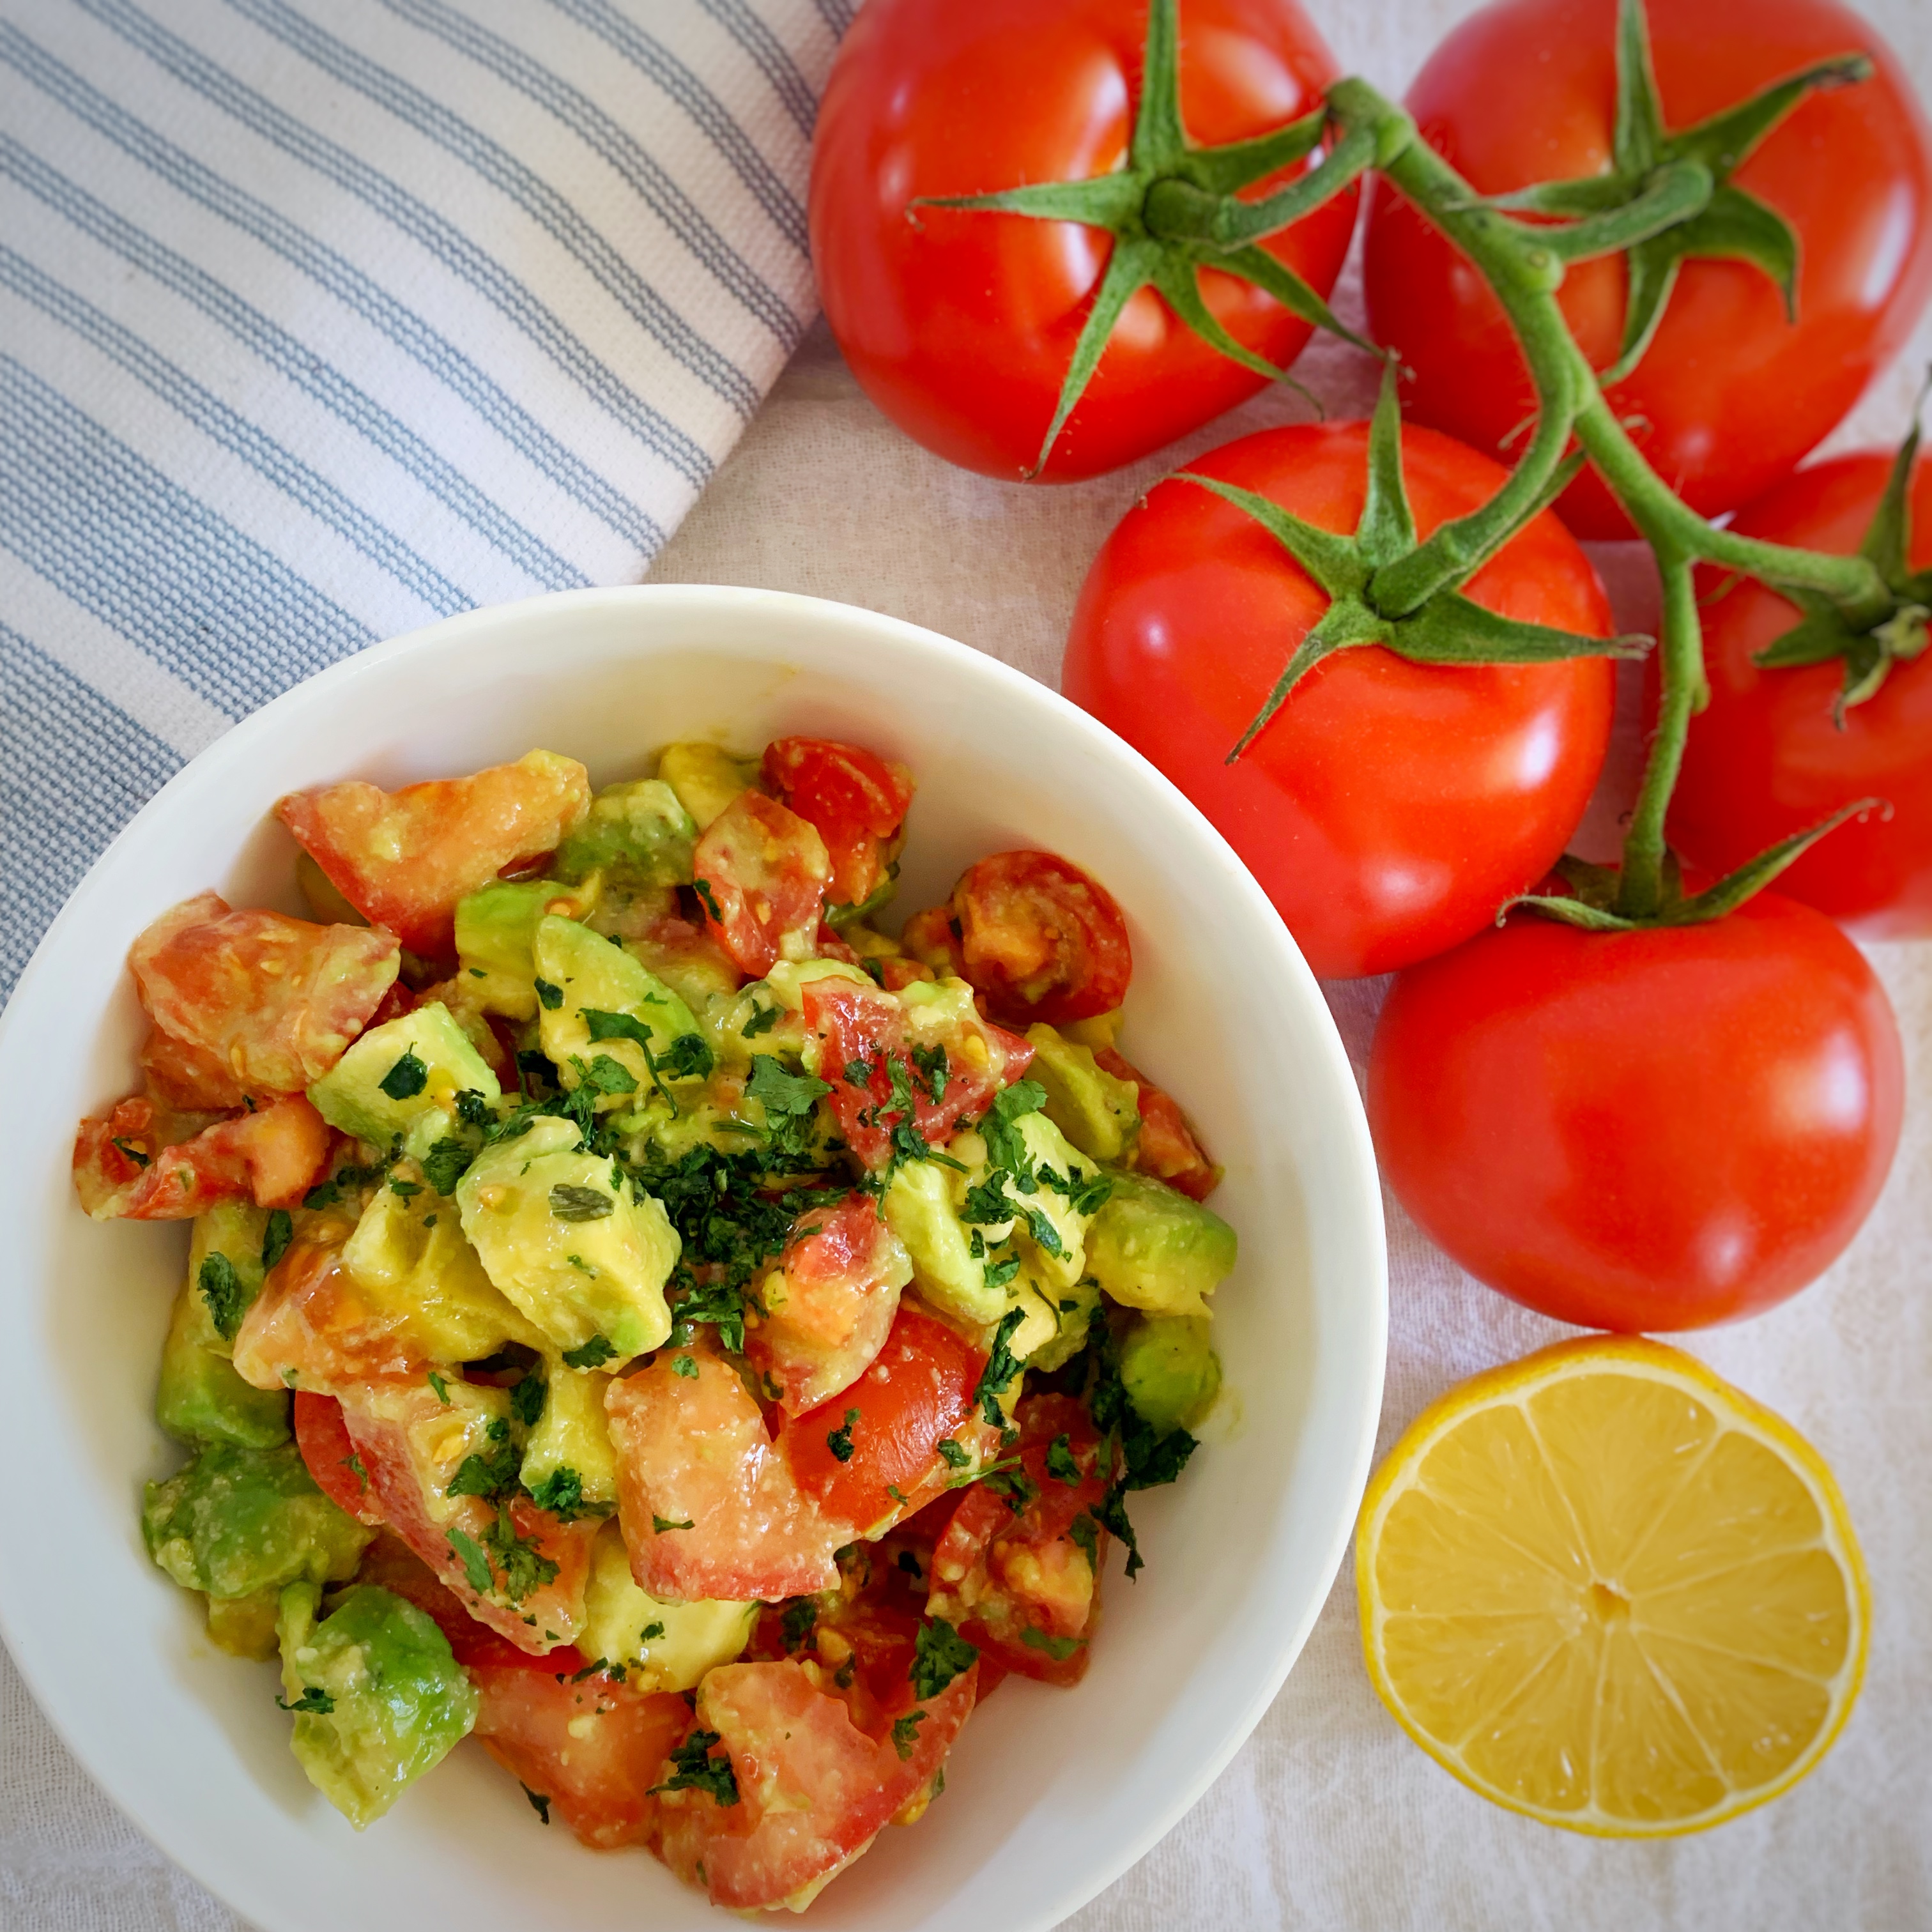 Tomato and avocado salad